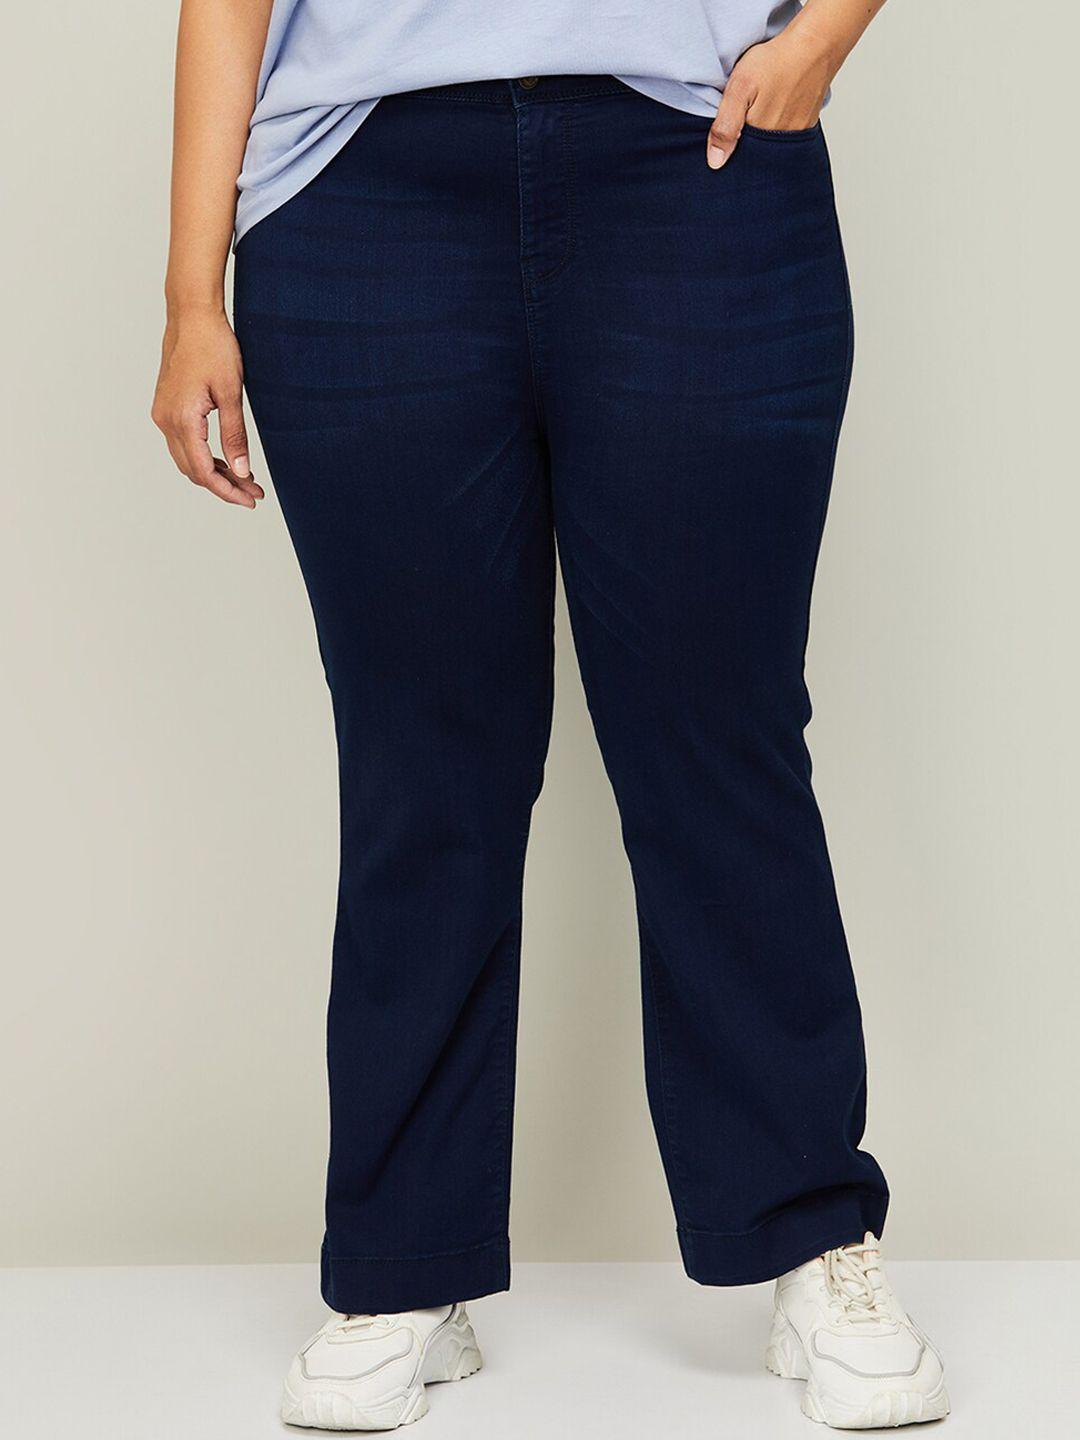 nexus plus size women dark shade mid-rise cotton jeans